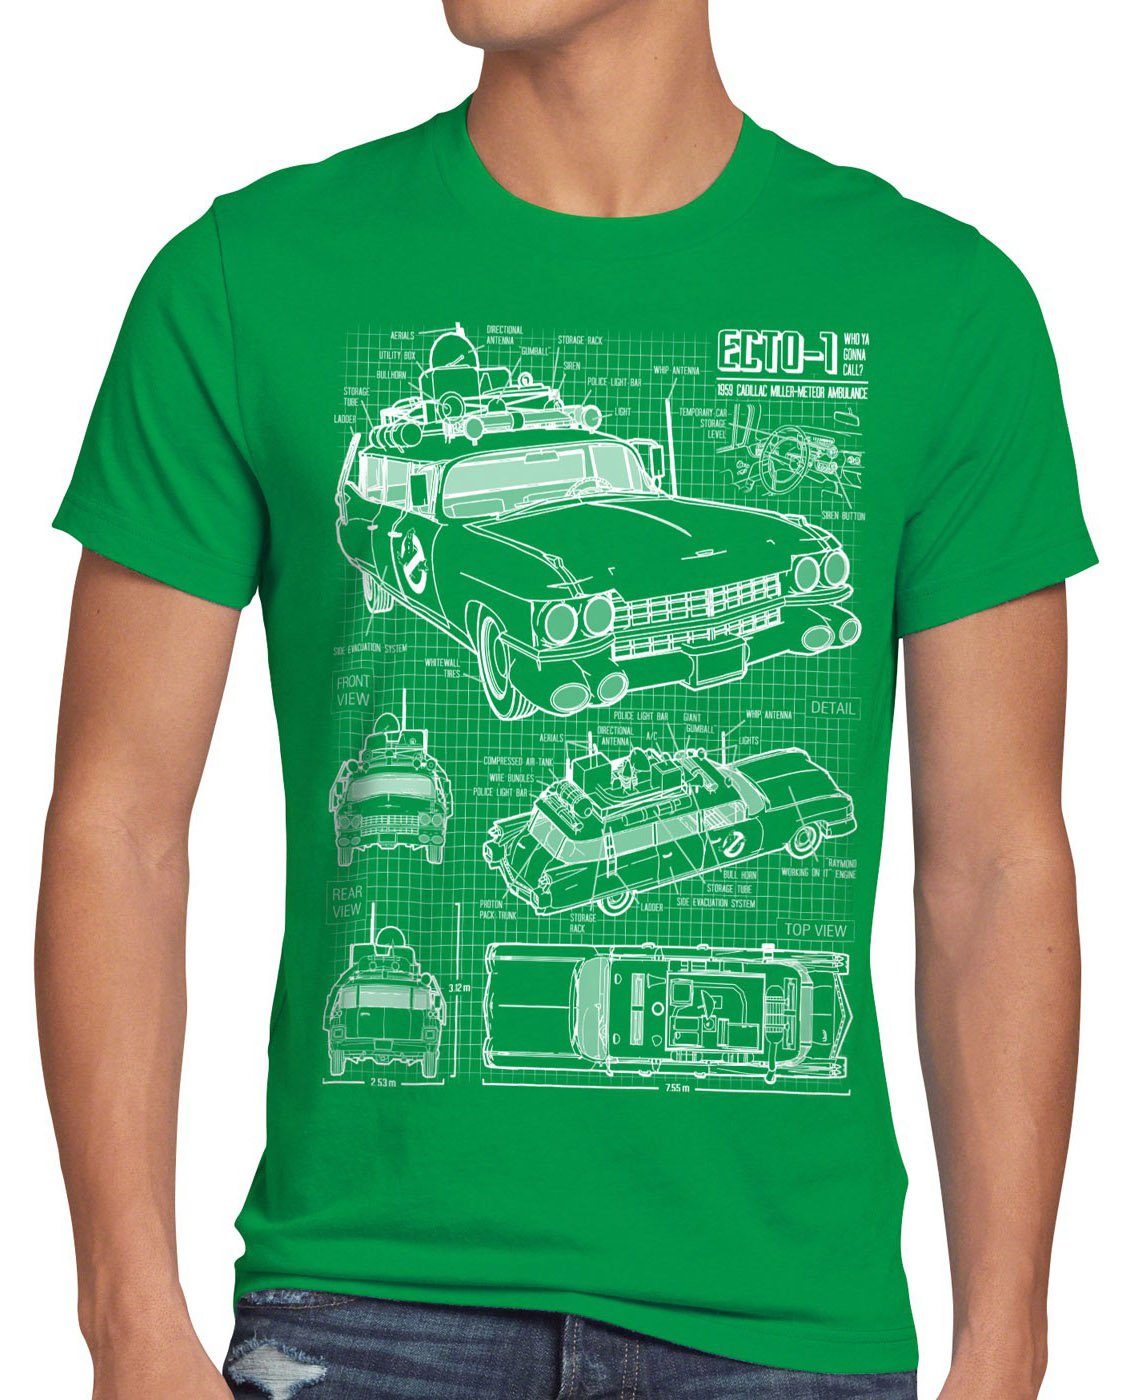 style3 Print-Shirt Herren T-Shirt ECTO-1 Blaupause busters geisterjäger ghost slimer geist auto car grün